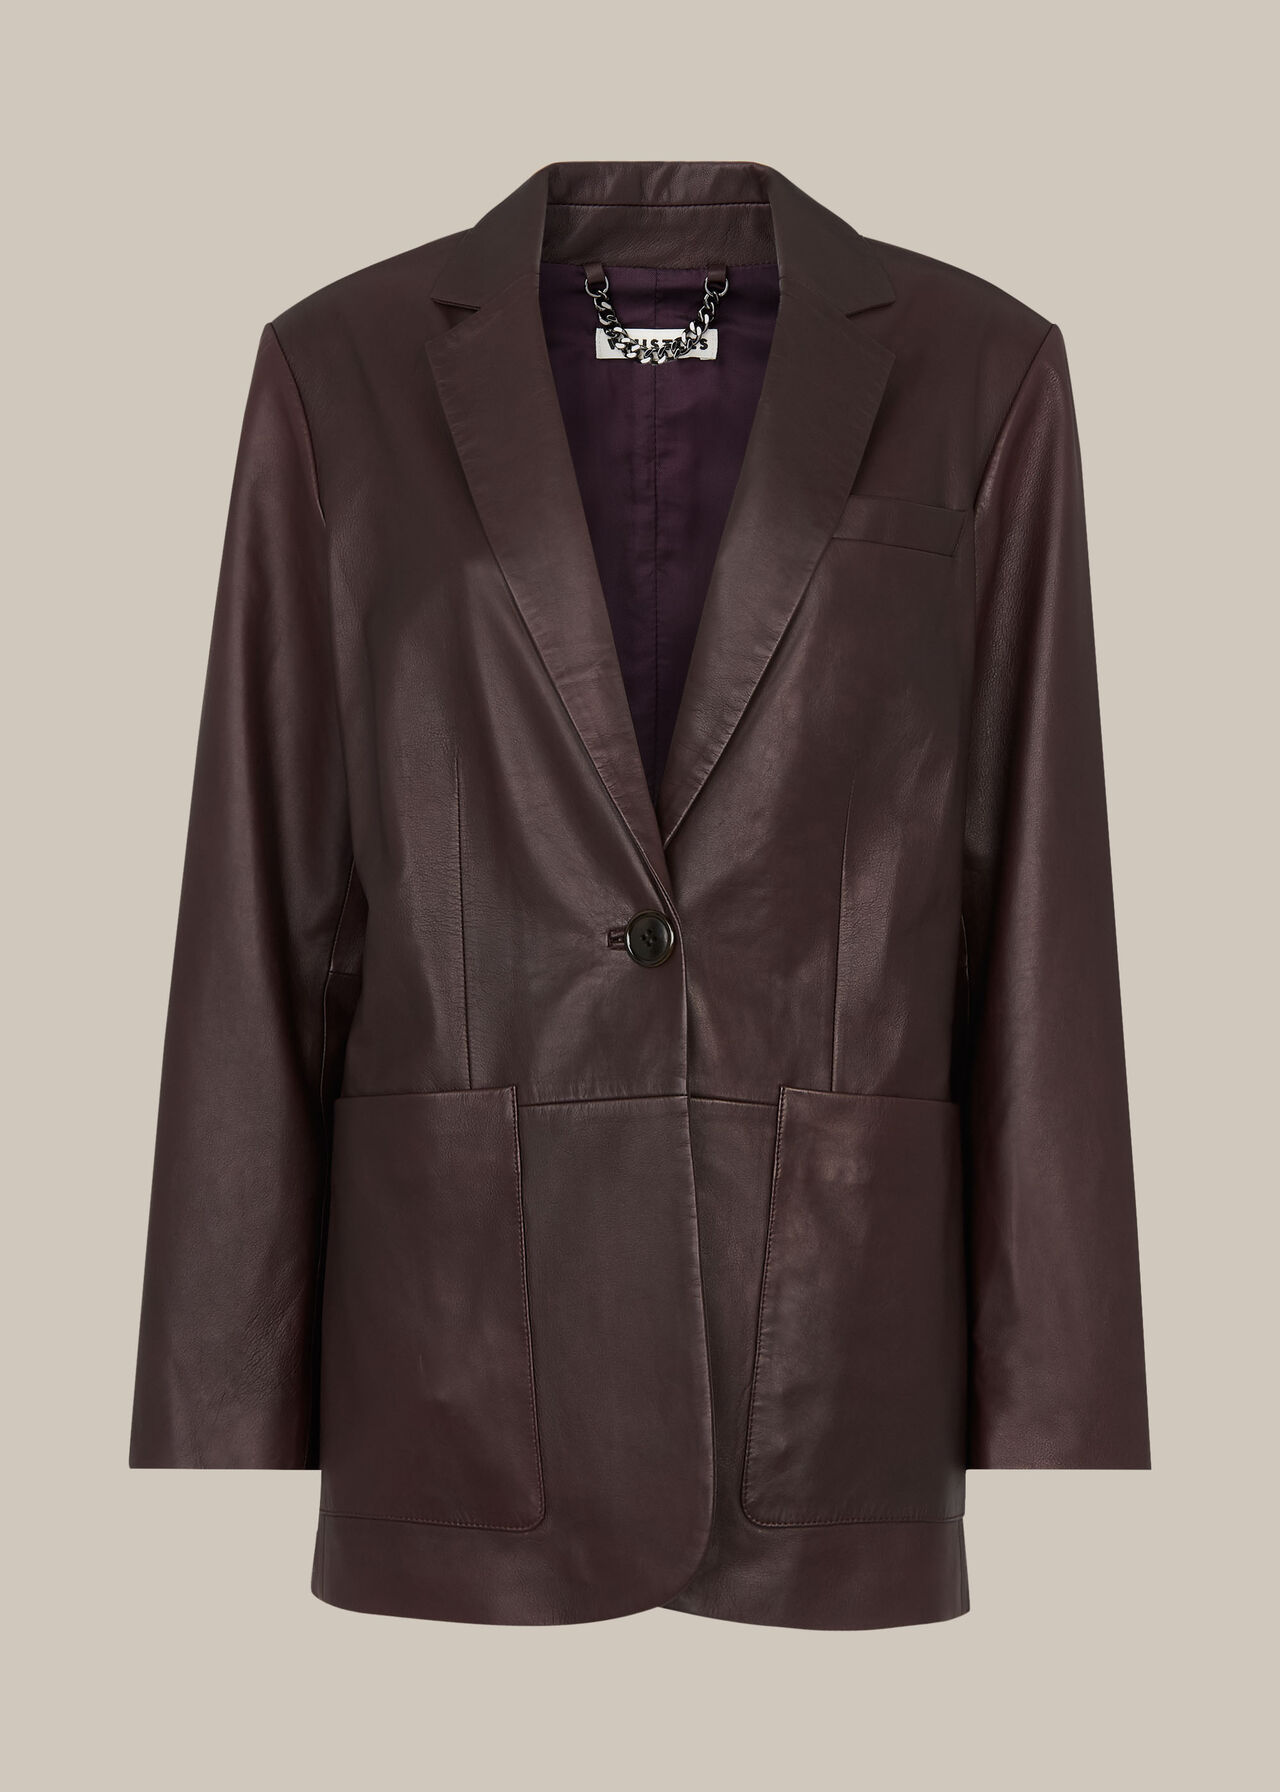 Burgundy Leather Blazer | WHISTLES